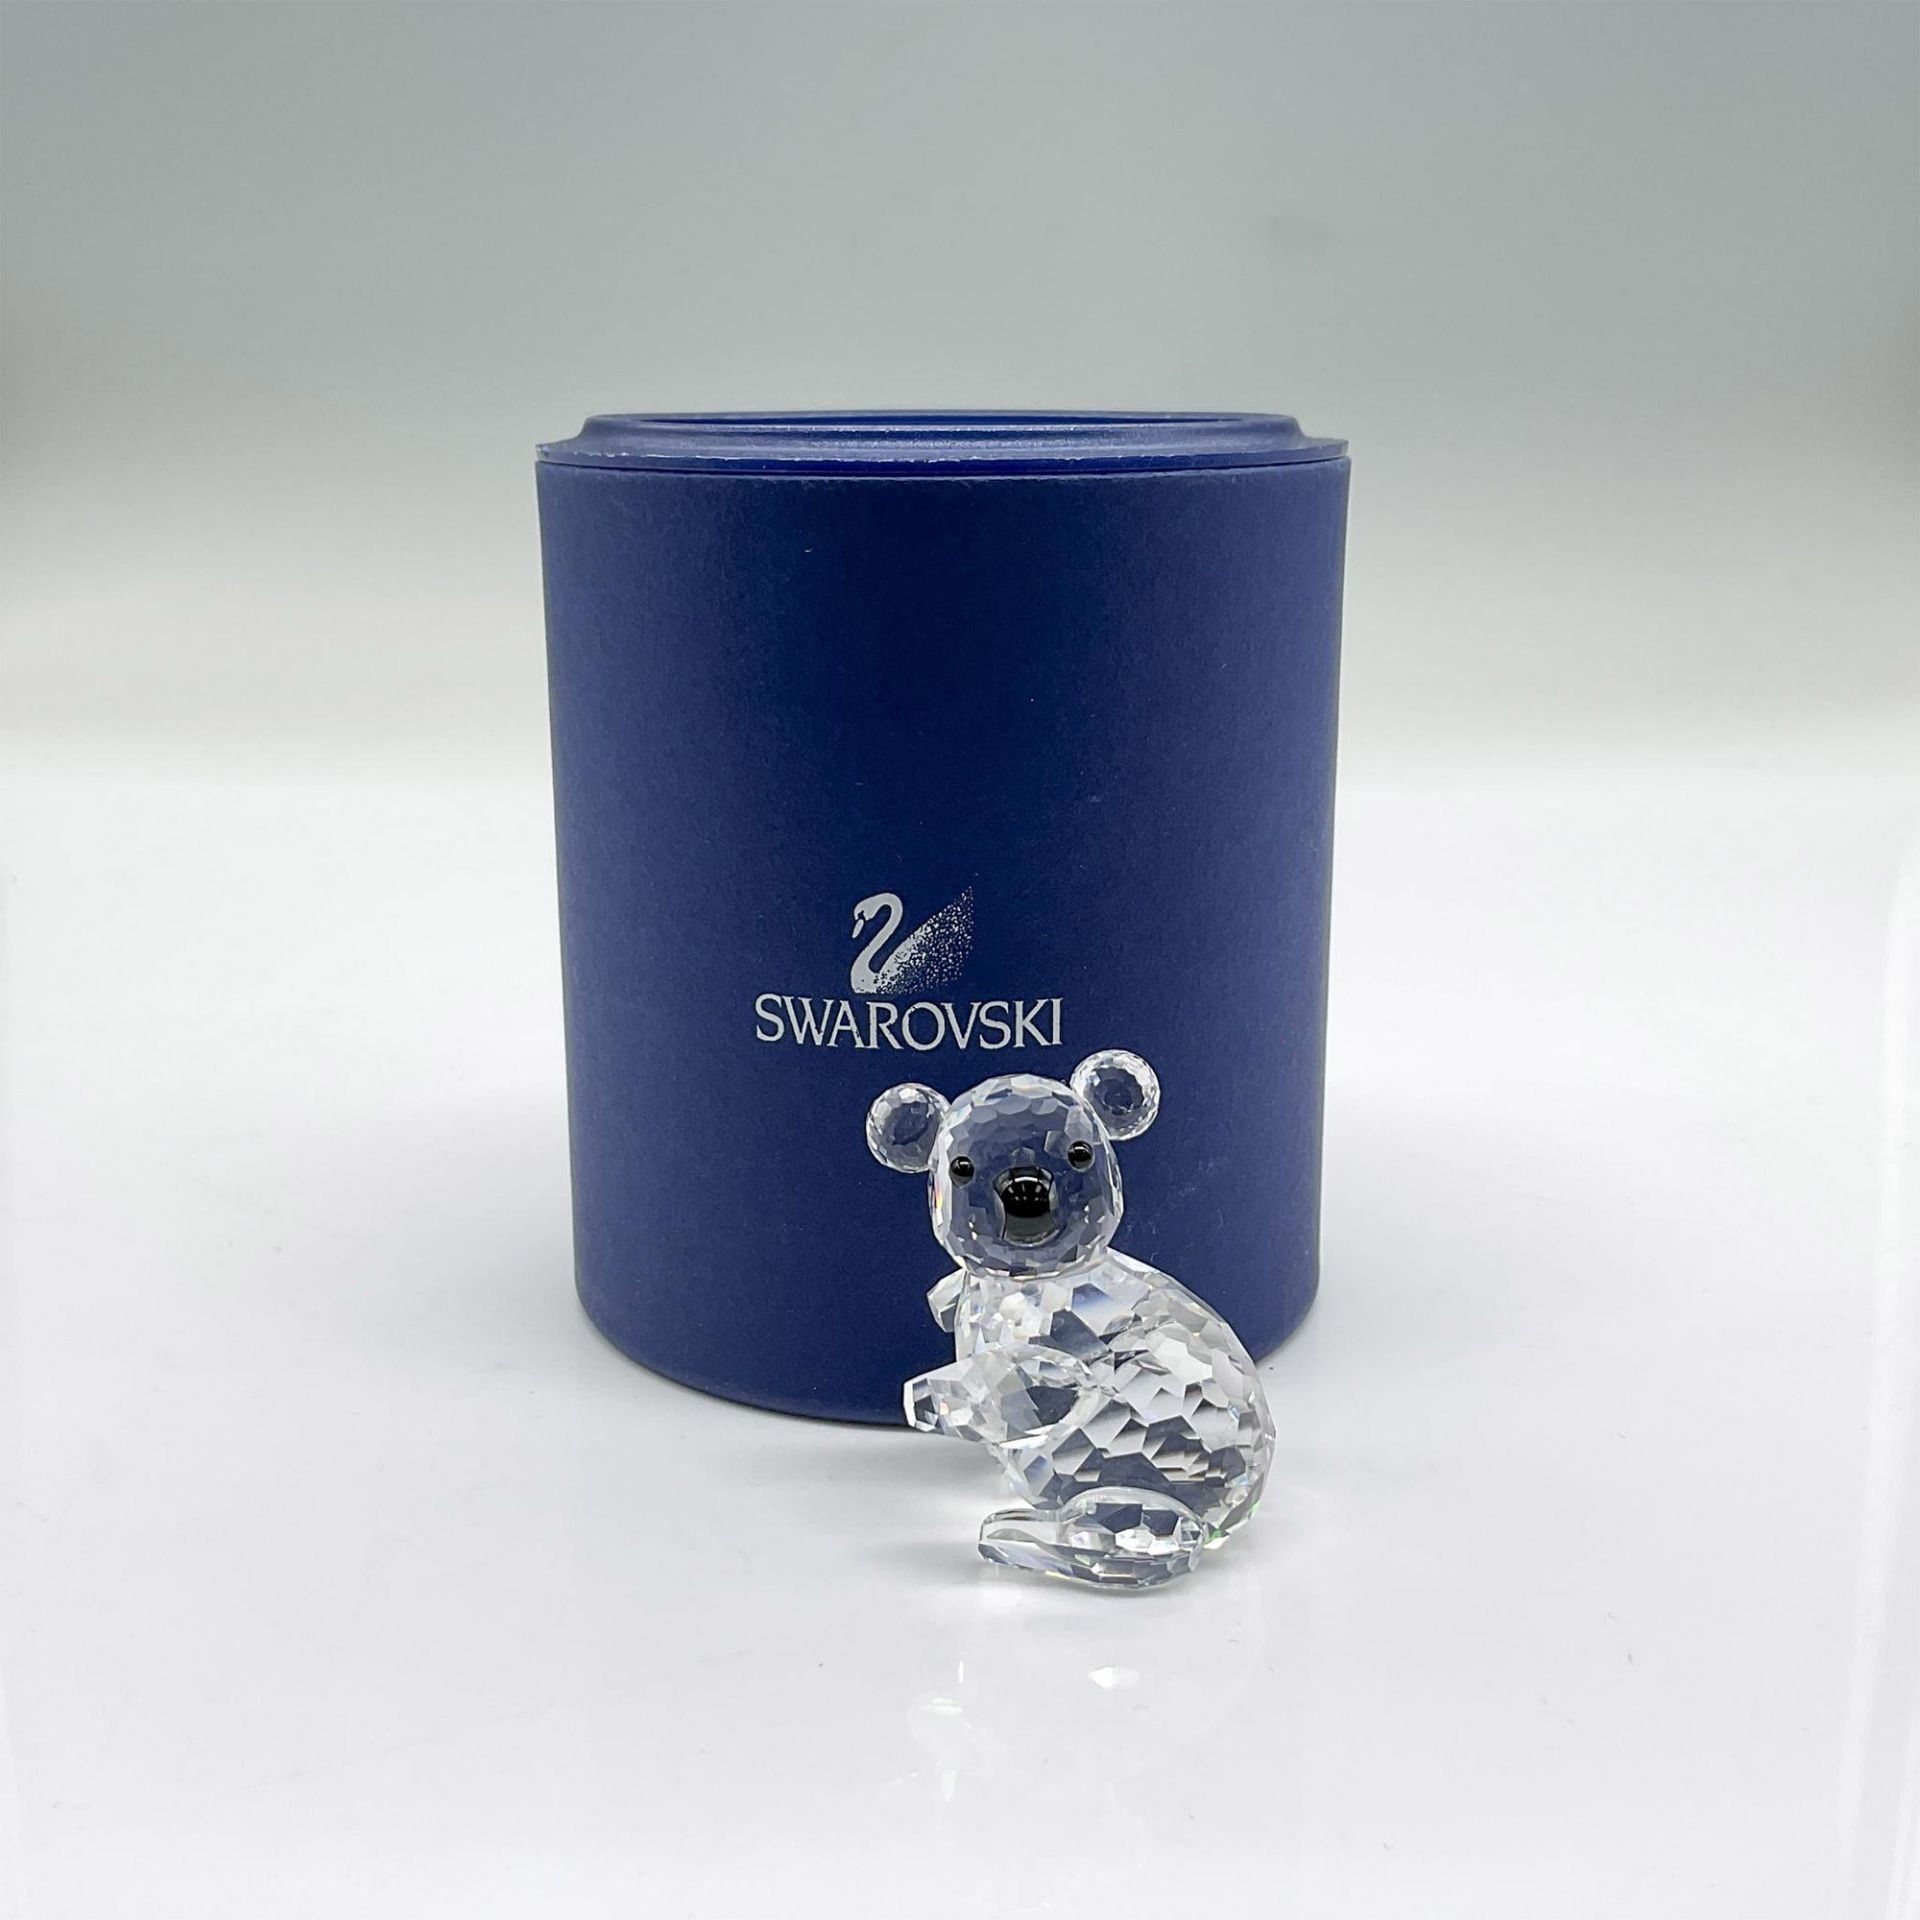 Swarovski Silver Crystal Figurine, Koala - Image 4 of 4